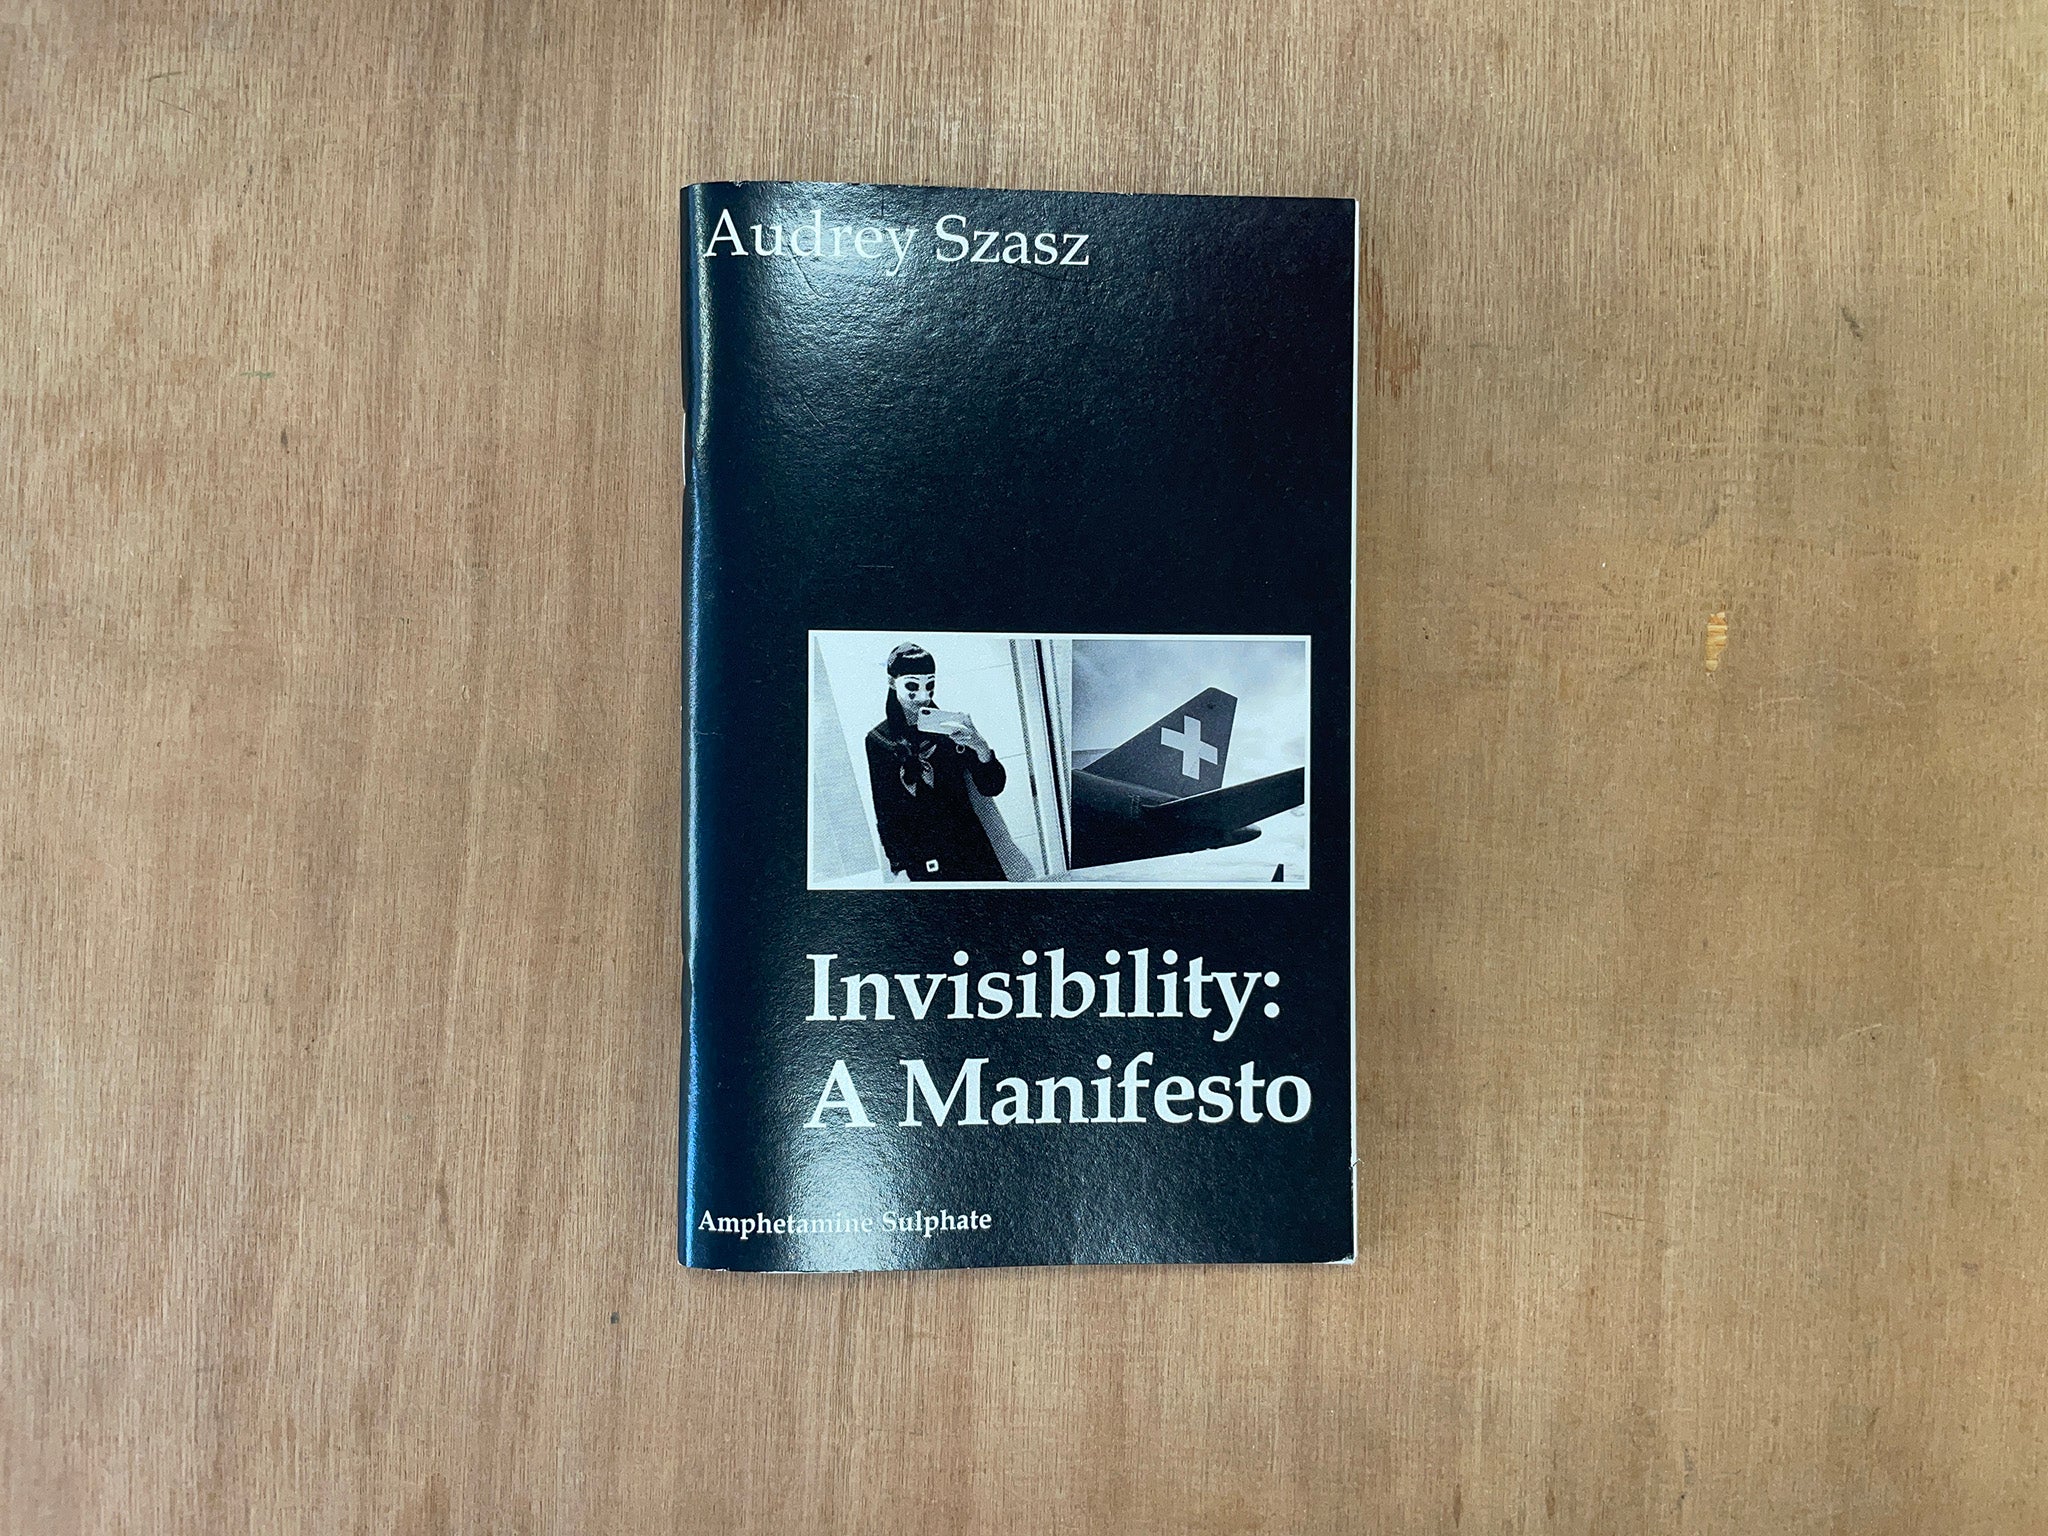 INVISIBILITY: A MANIFESTO by Audrey Szasz